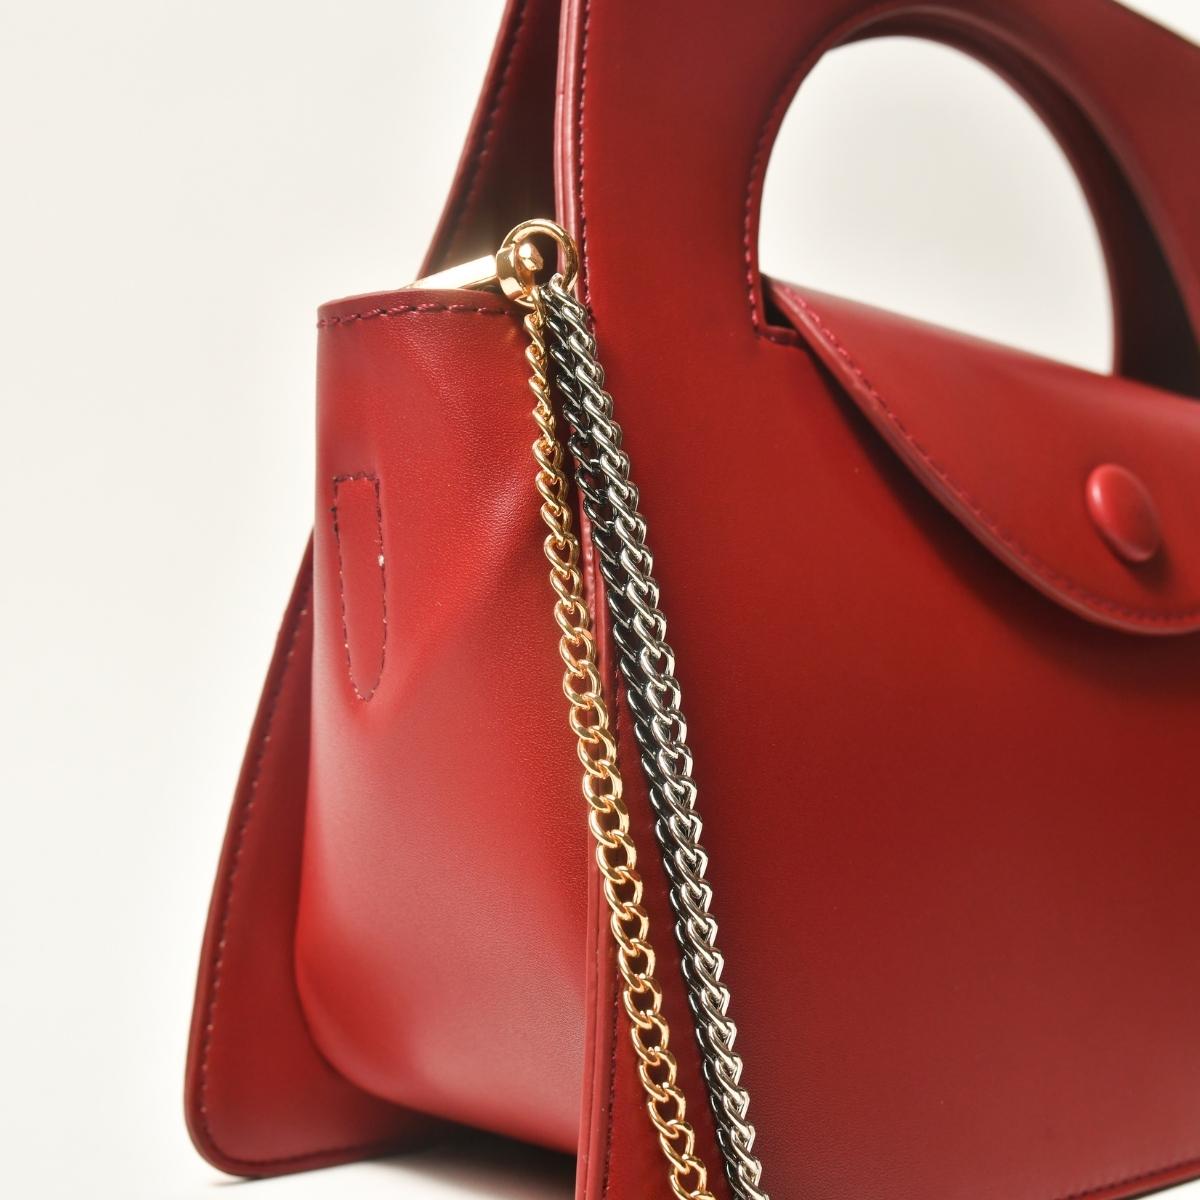 Snag the Best Women's Bags of the Season | Primark